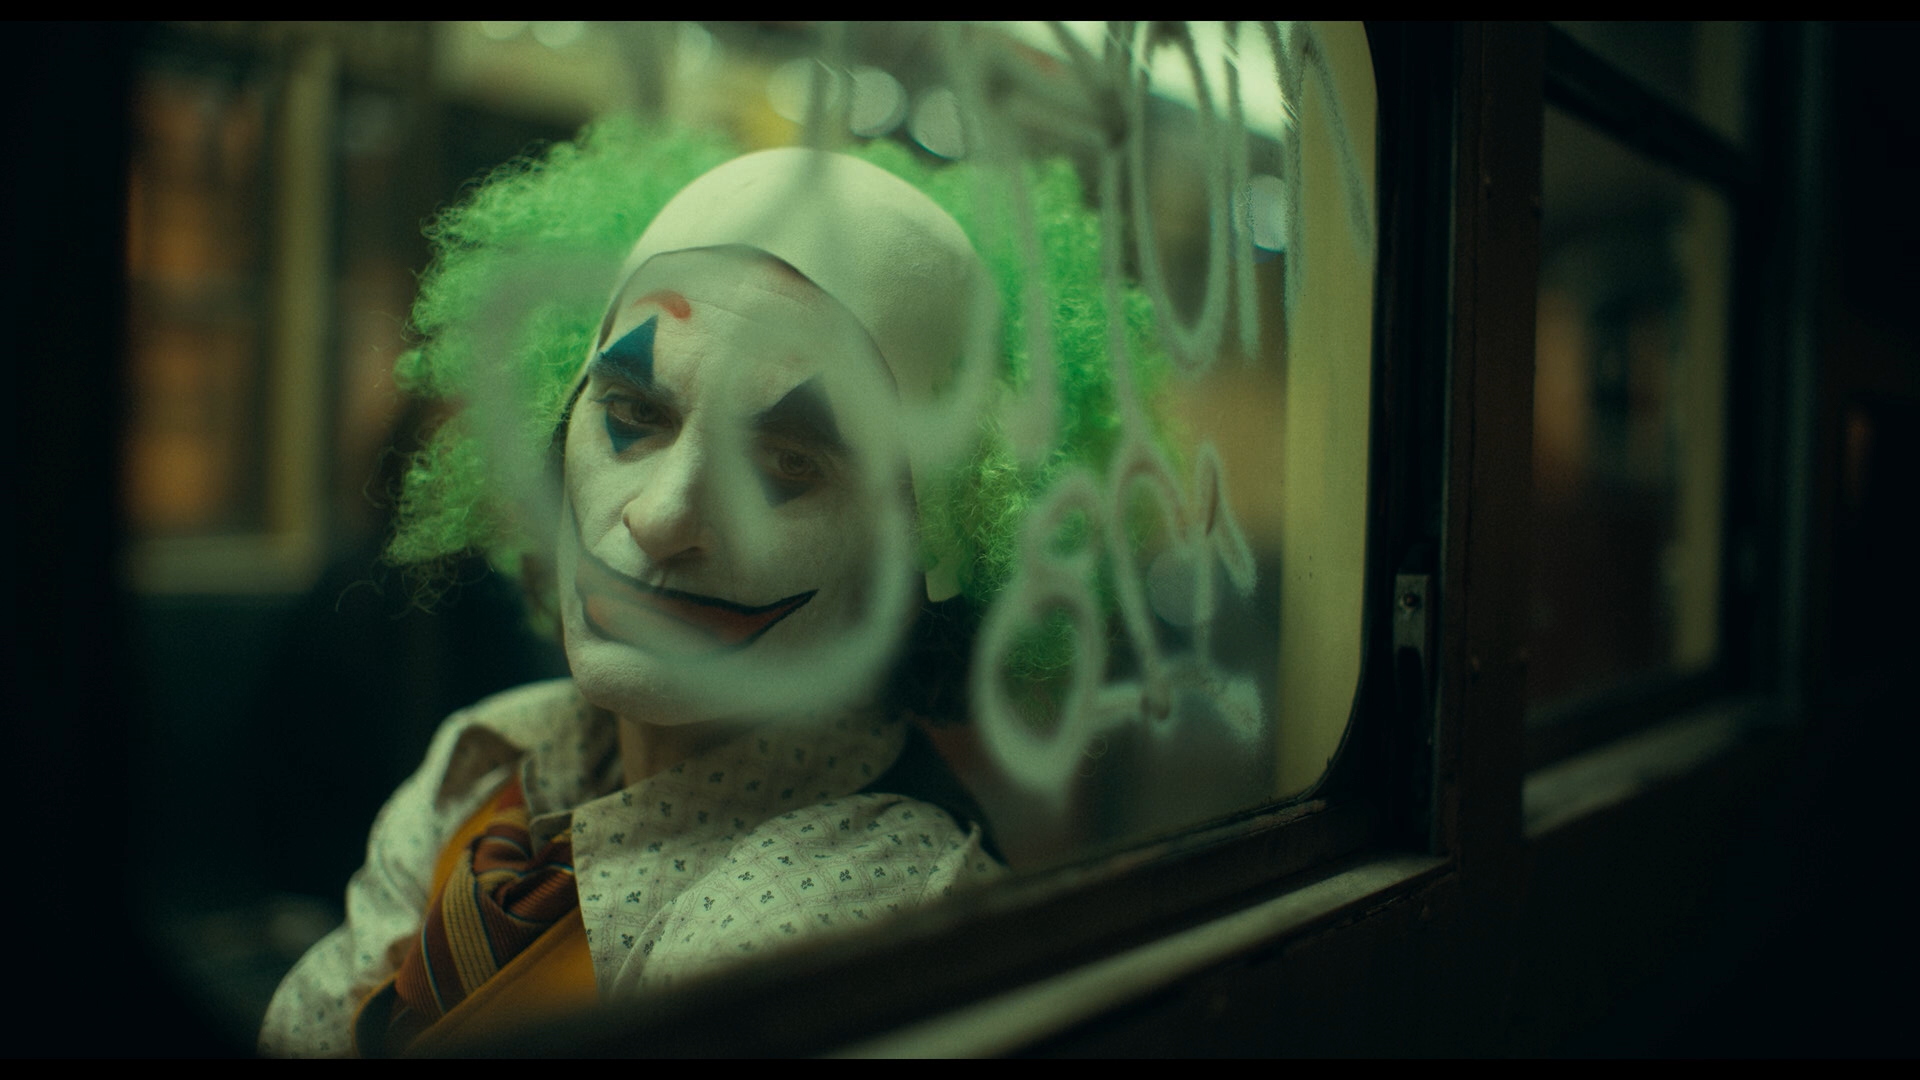 People 1920x1080 Joker (2019 Movie) Joker Joaquin Phoenix men film stills movies DC Comics makeup face paint